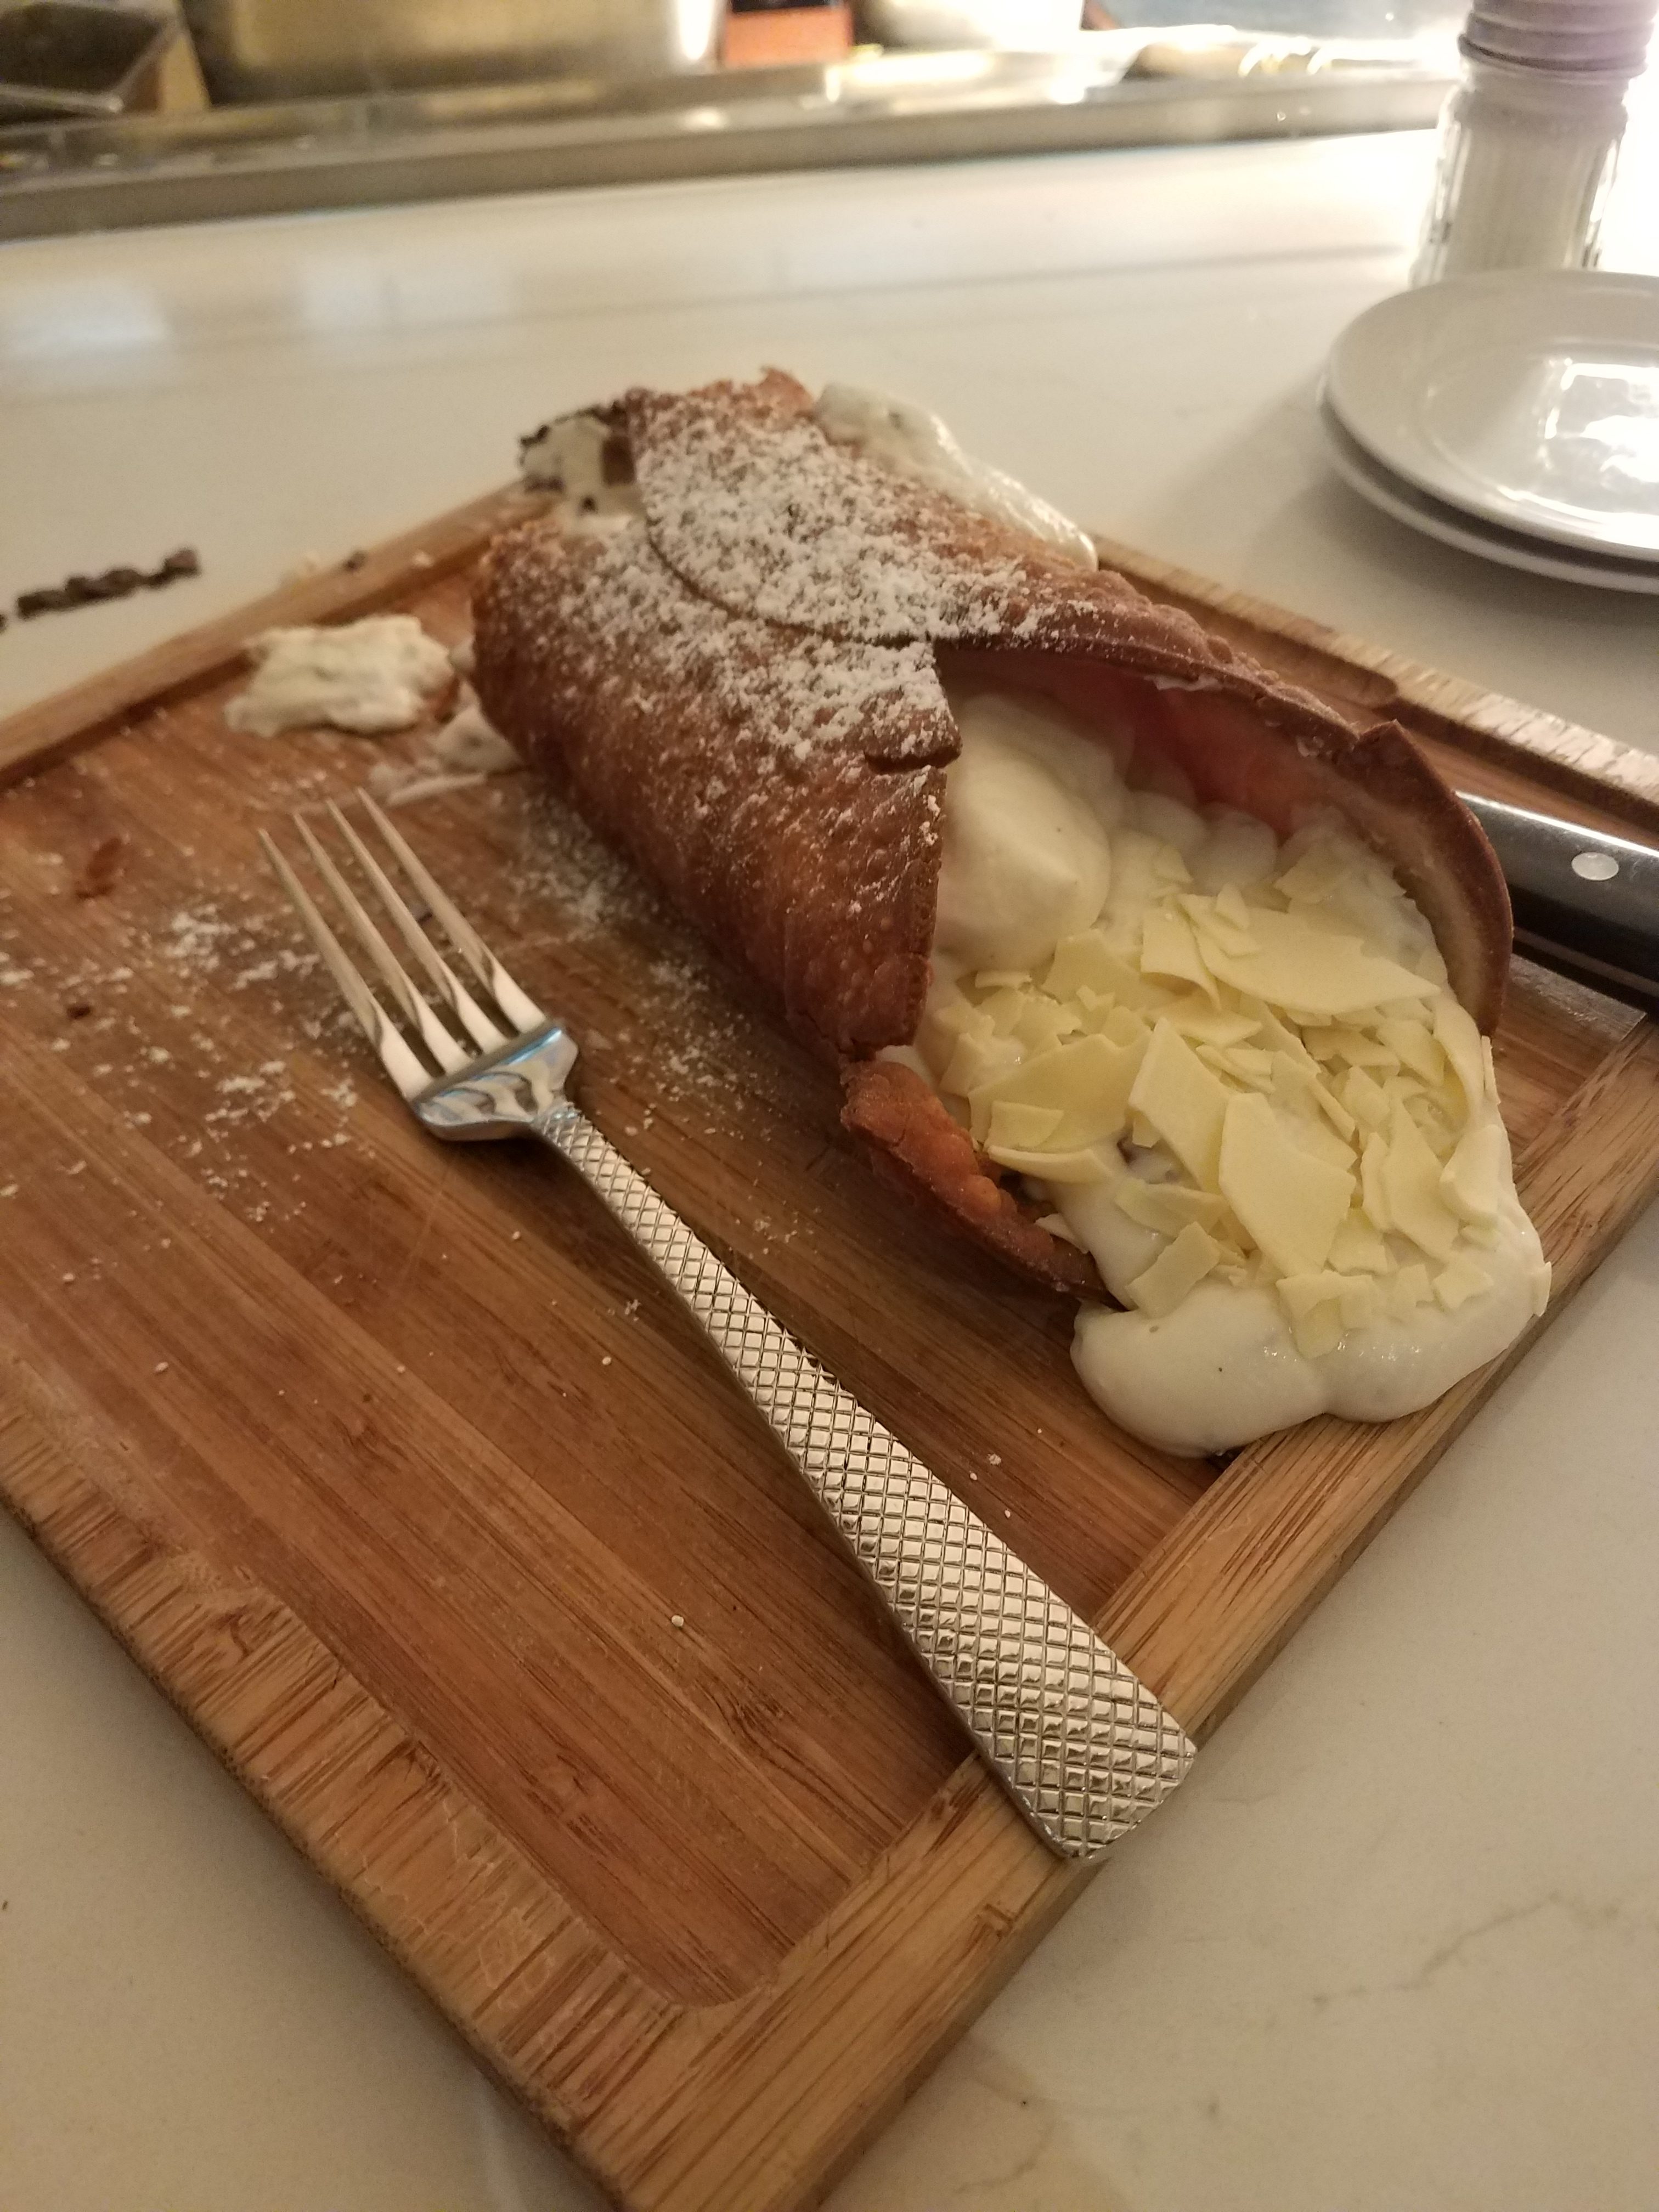 Giant cannoli dessert at VIVO Italian Kitchen - Universal CityWalk - by unofficialuniversal.com.